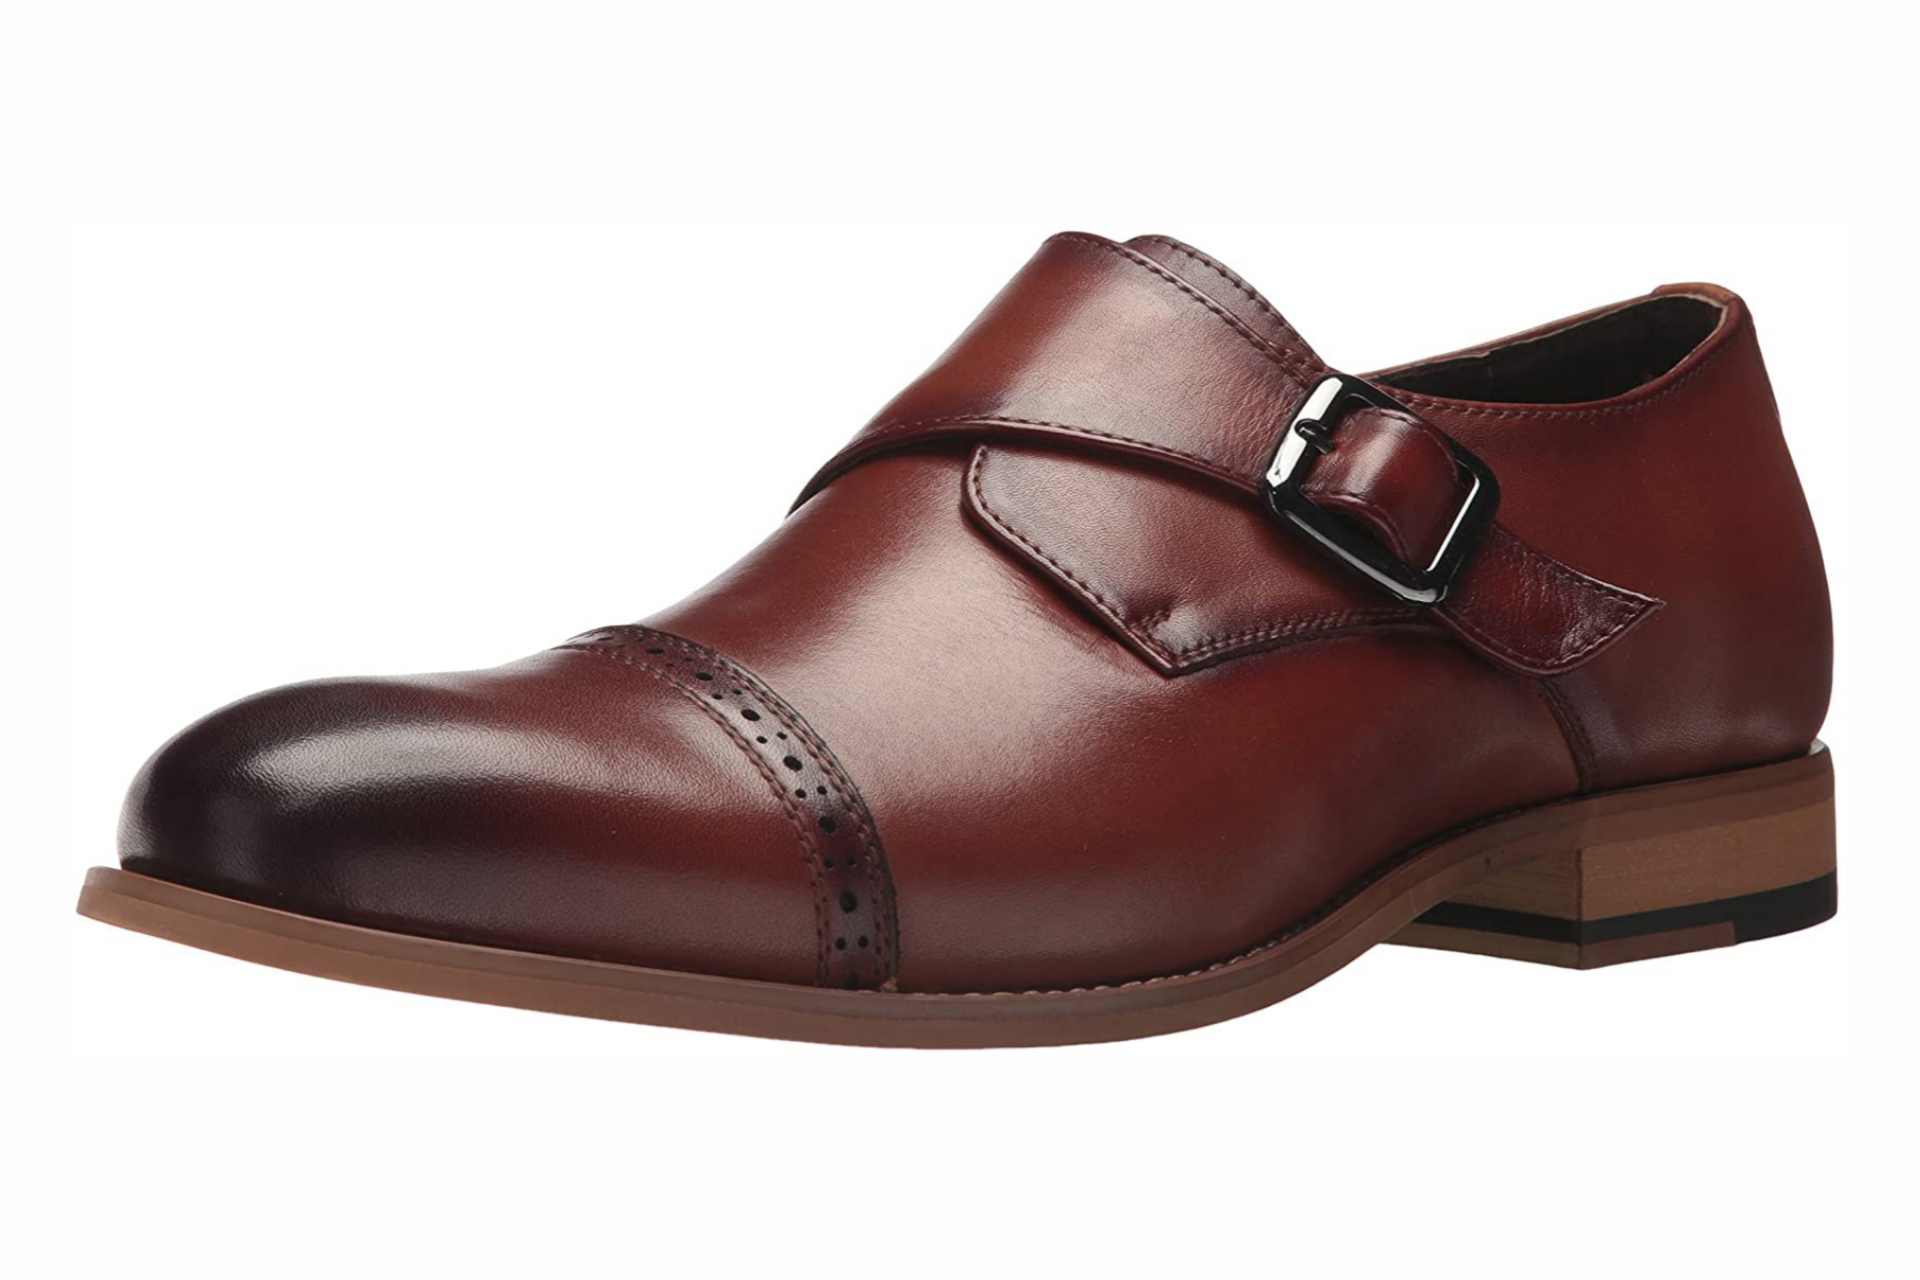 Brown Monk Strap shoes for men